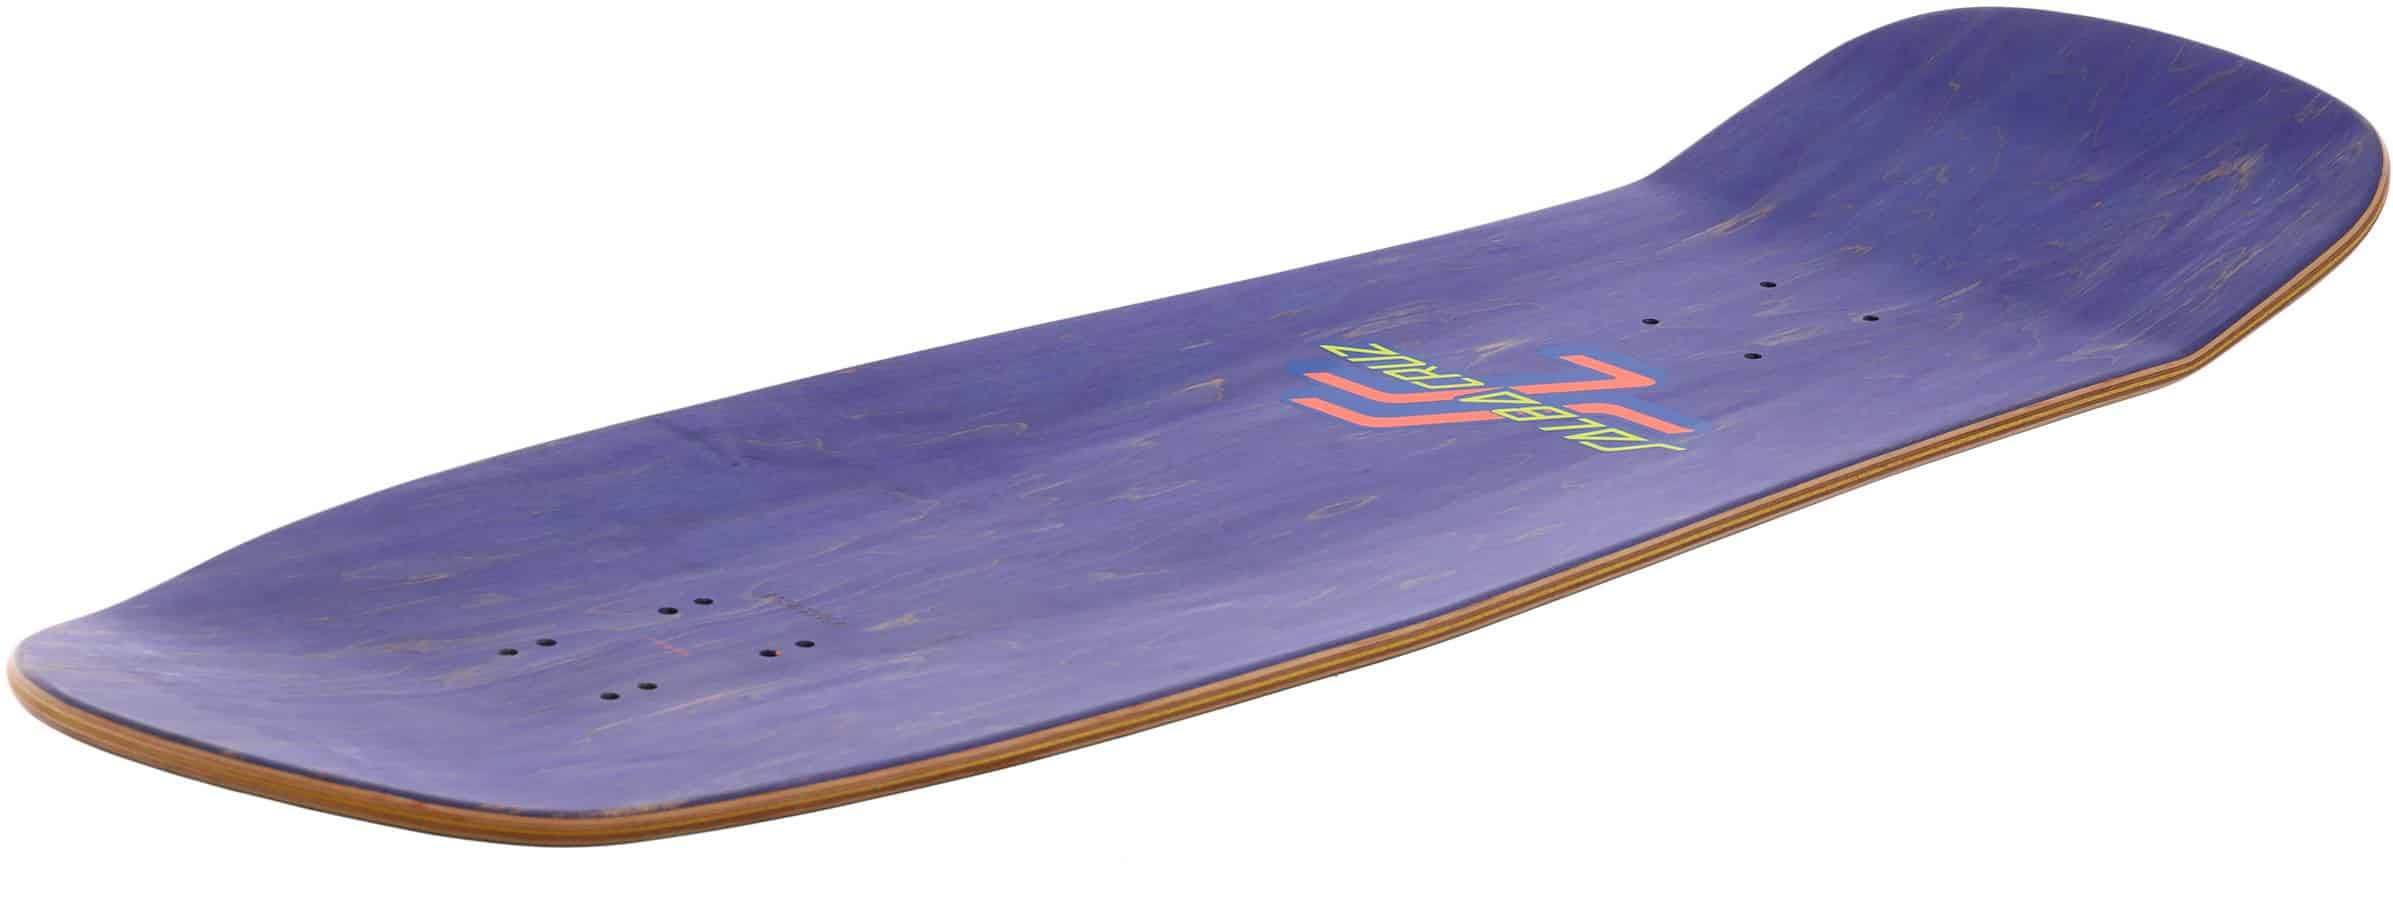 wraak Somber straal Santa Cruz Salba Baby Stomper 10.09 LTD Reissue Skateboard Deck - Free  Shipping | Tactics